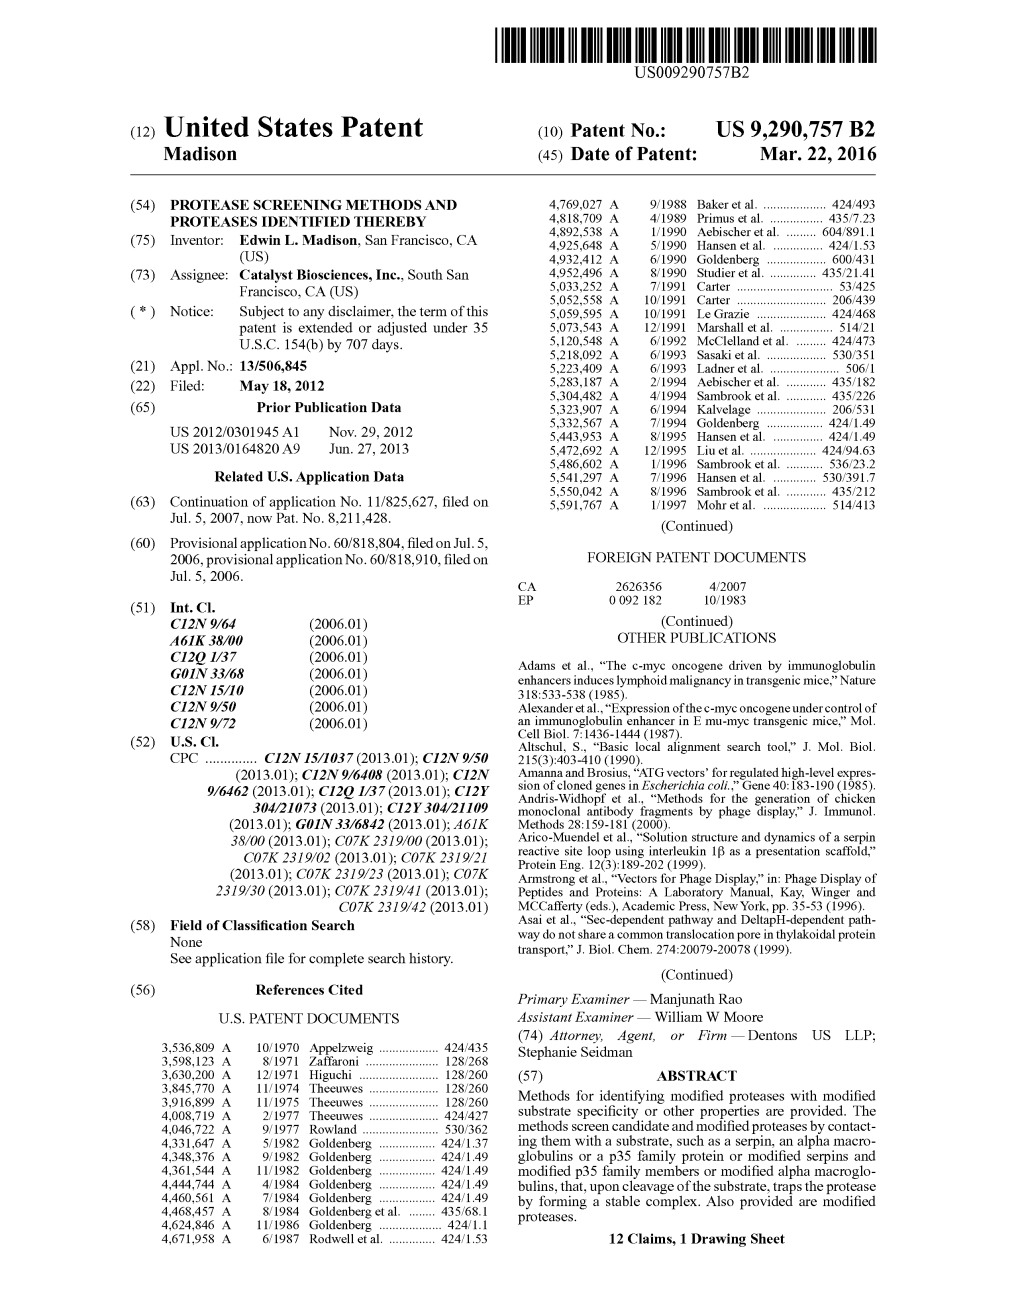 (12) United States Patent (10) Patent No.: US 9,290,757 B2 Madison (45) Date of Patent: Mar